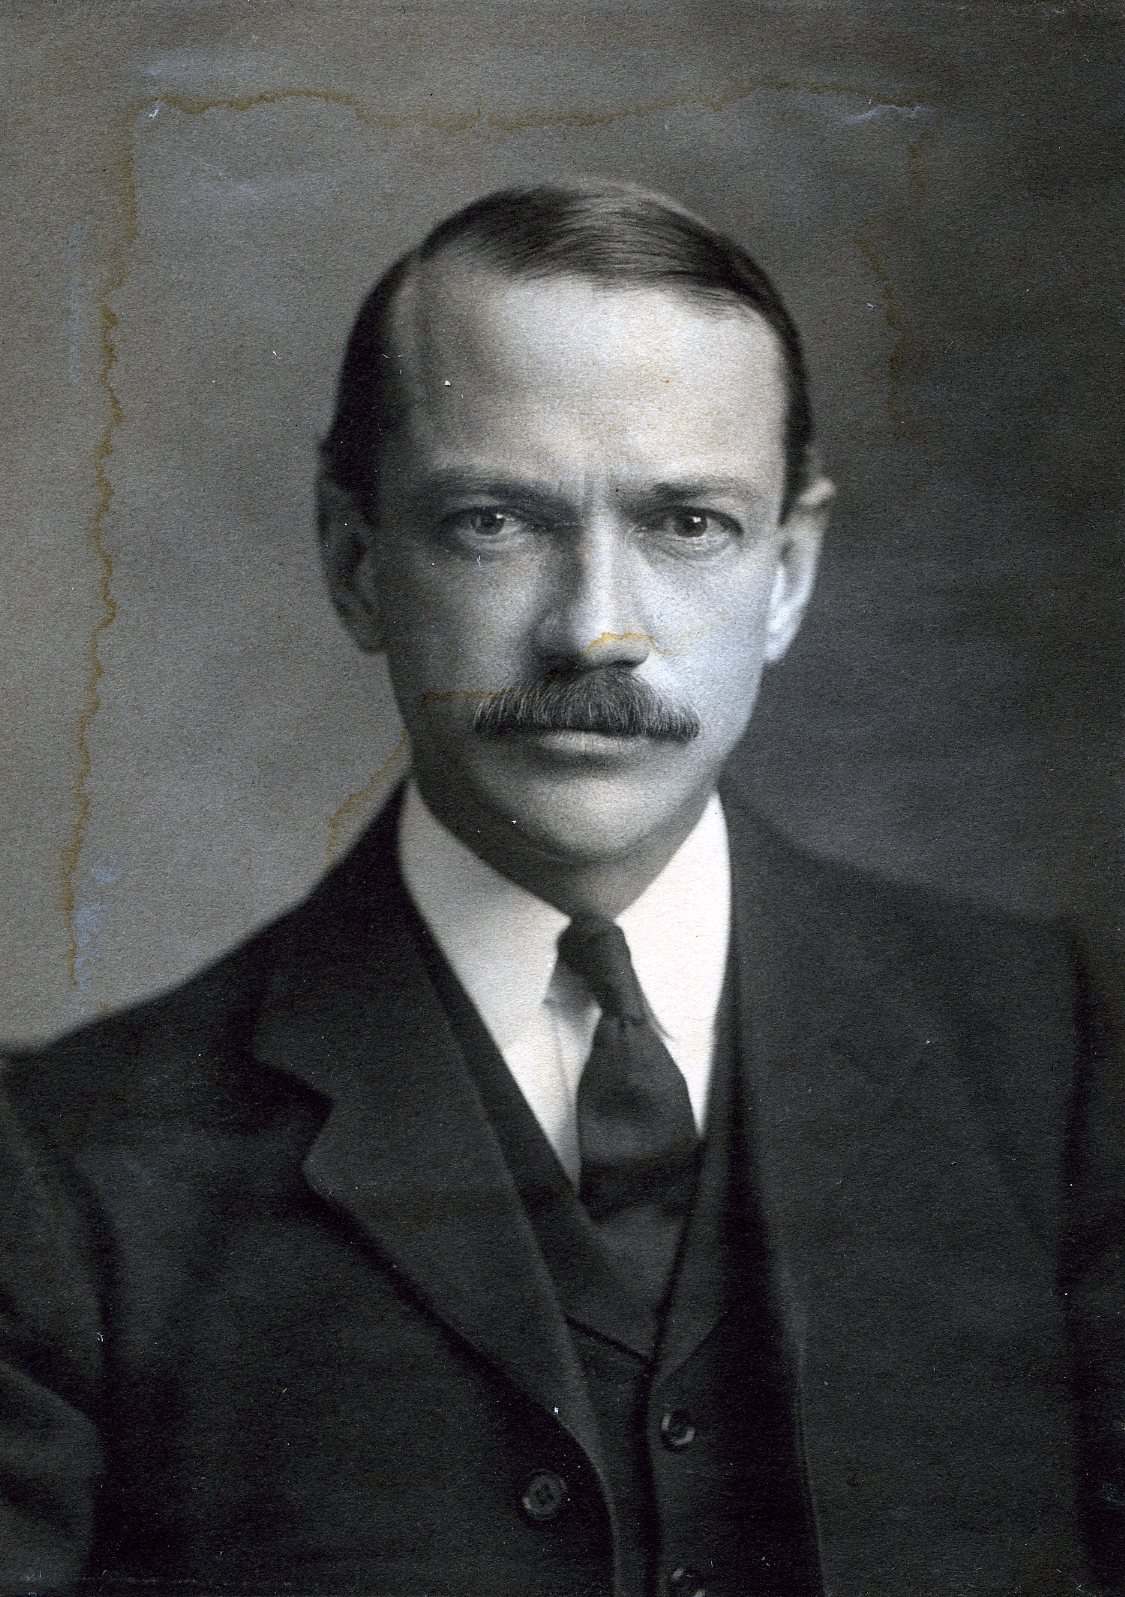 Member portrait of William Tenney Brewster